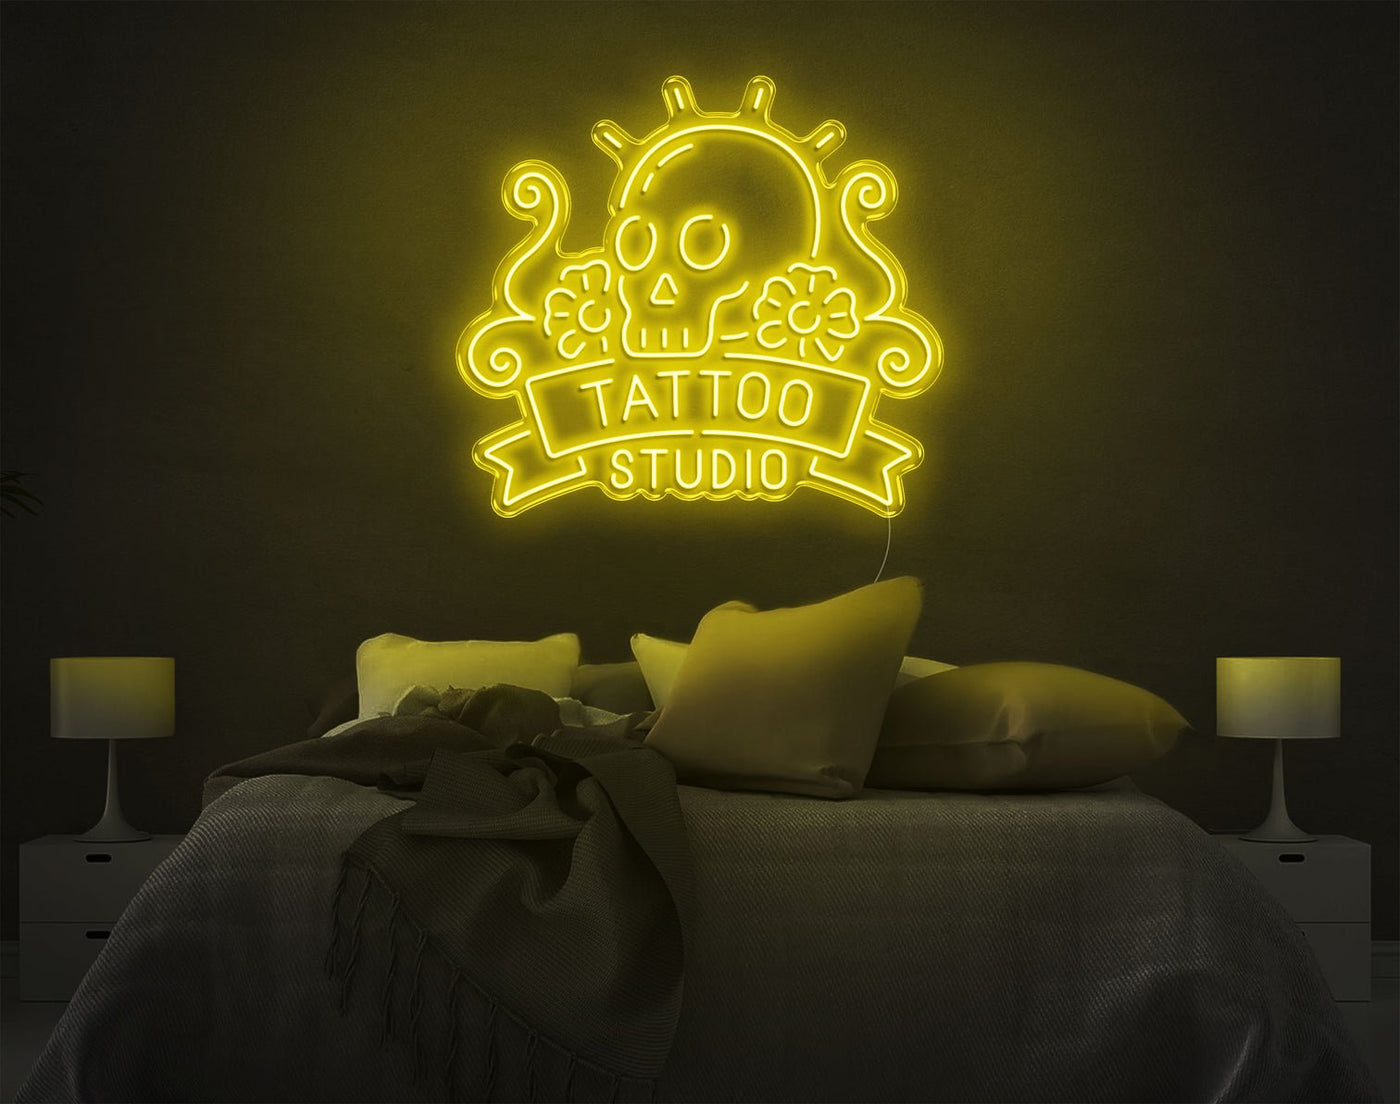 Tattoo Studio LED Neon Sign - 30inch x 33inchYellow